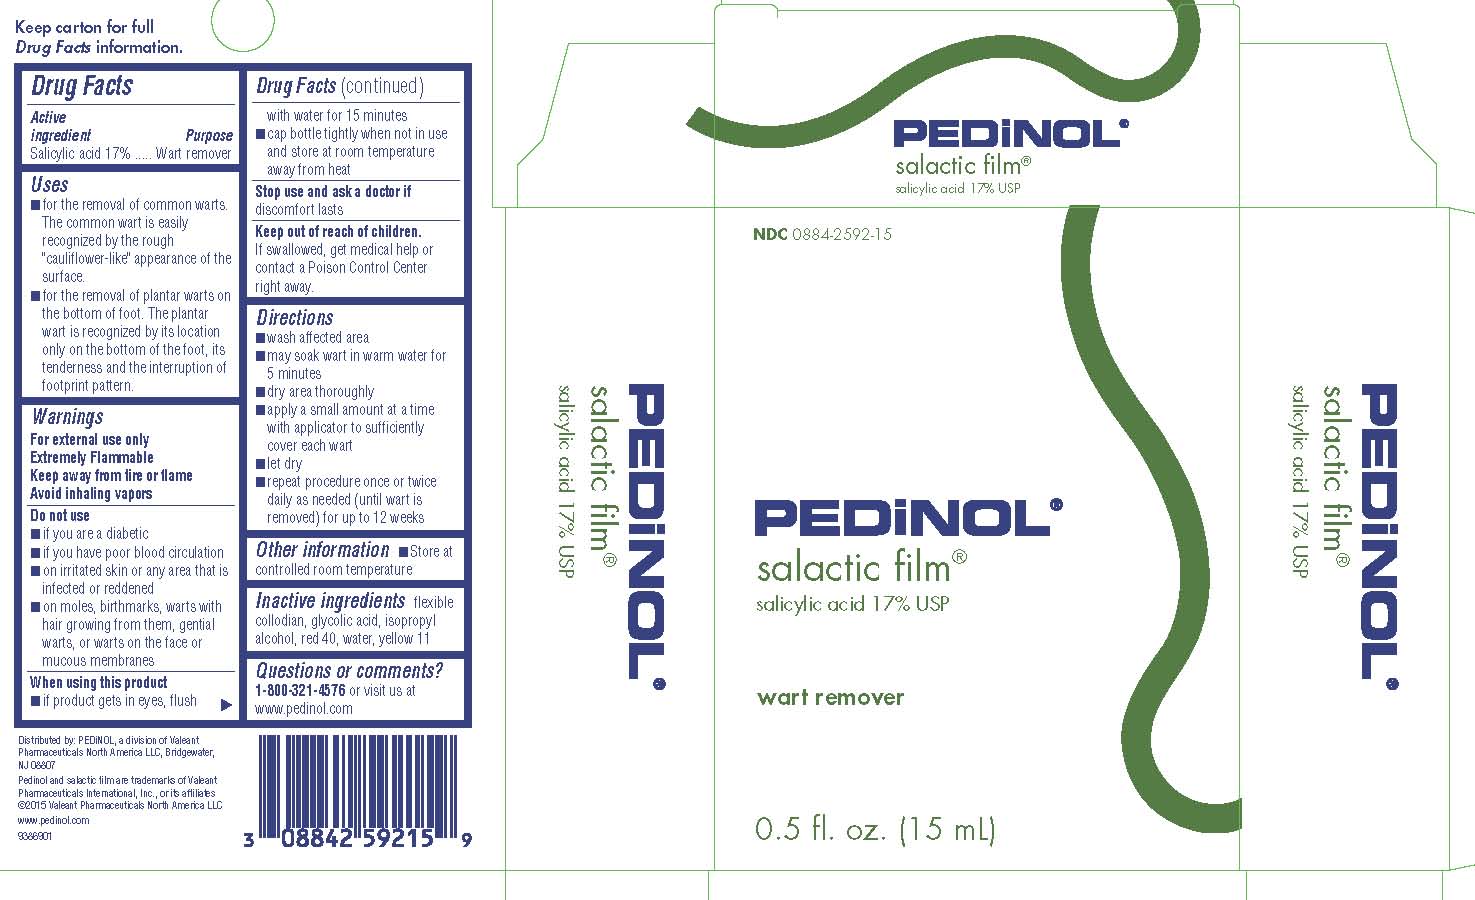 Pedinol salactic film - 0.5 fl. oz. (15 mL) bottle